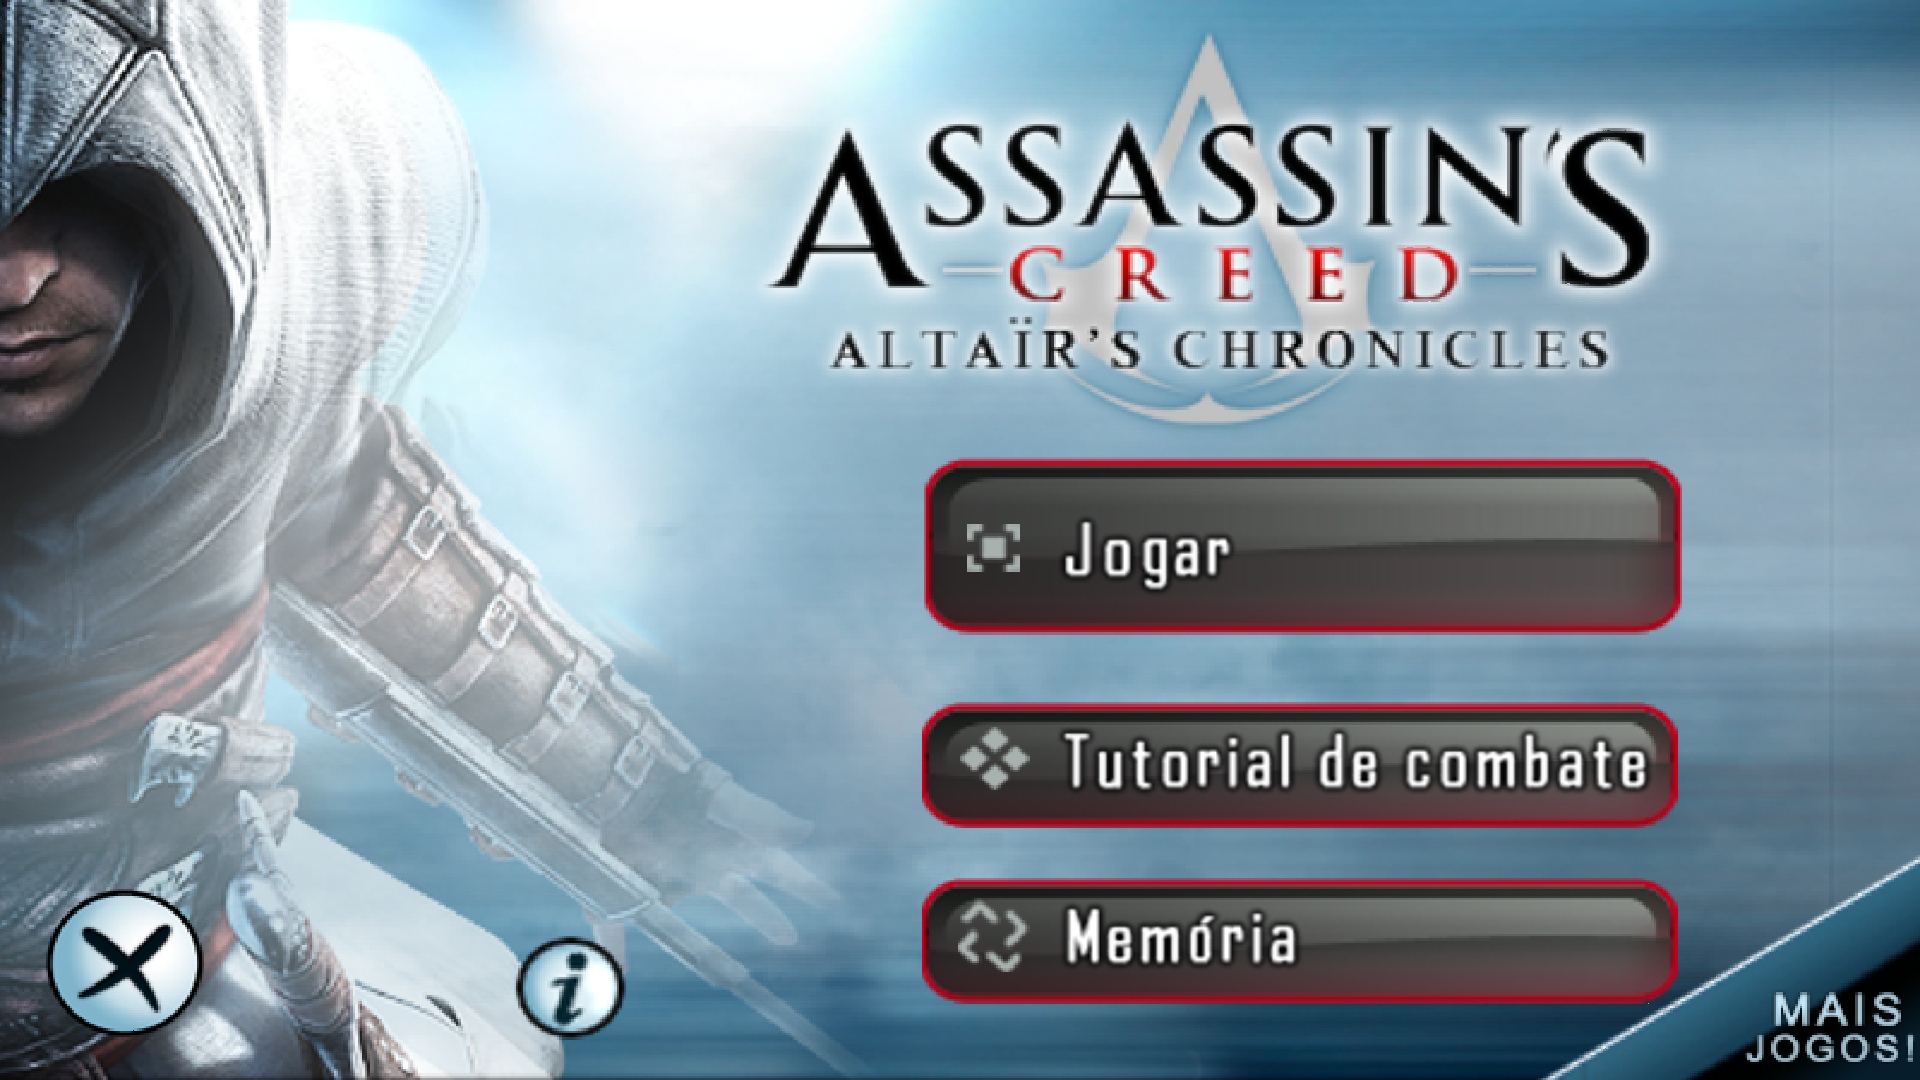 Assassins Creed 1.1.2-Android. Assassin игра на андроиде. Игра Assassin’s Creed II на андроид. Assassins Creed Altair Chronicles Nintendo DS.